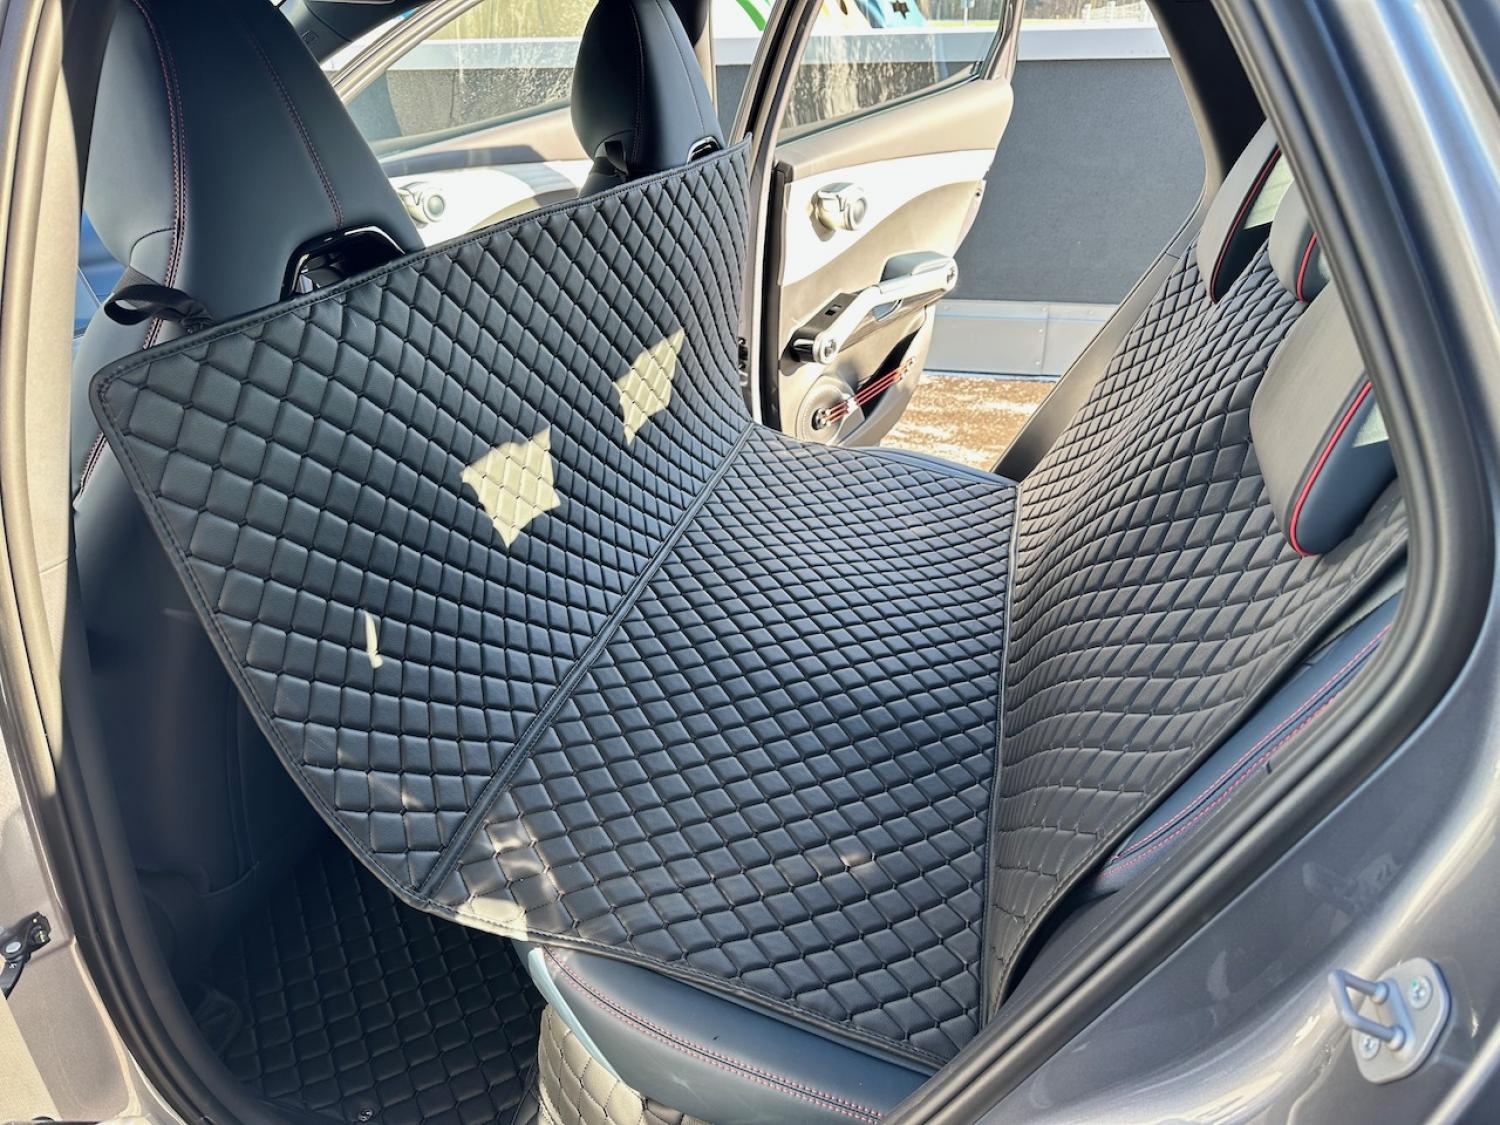 CARSTYLER® Back Seat Cover Geeignet Für VW Touareg 2. Generation, 2010-2018 links keine Mulde